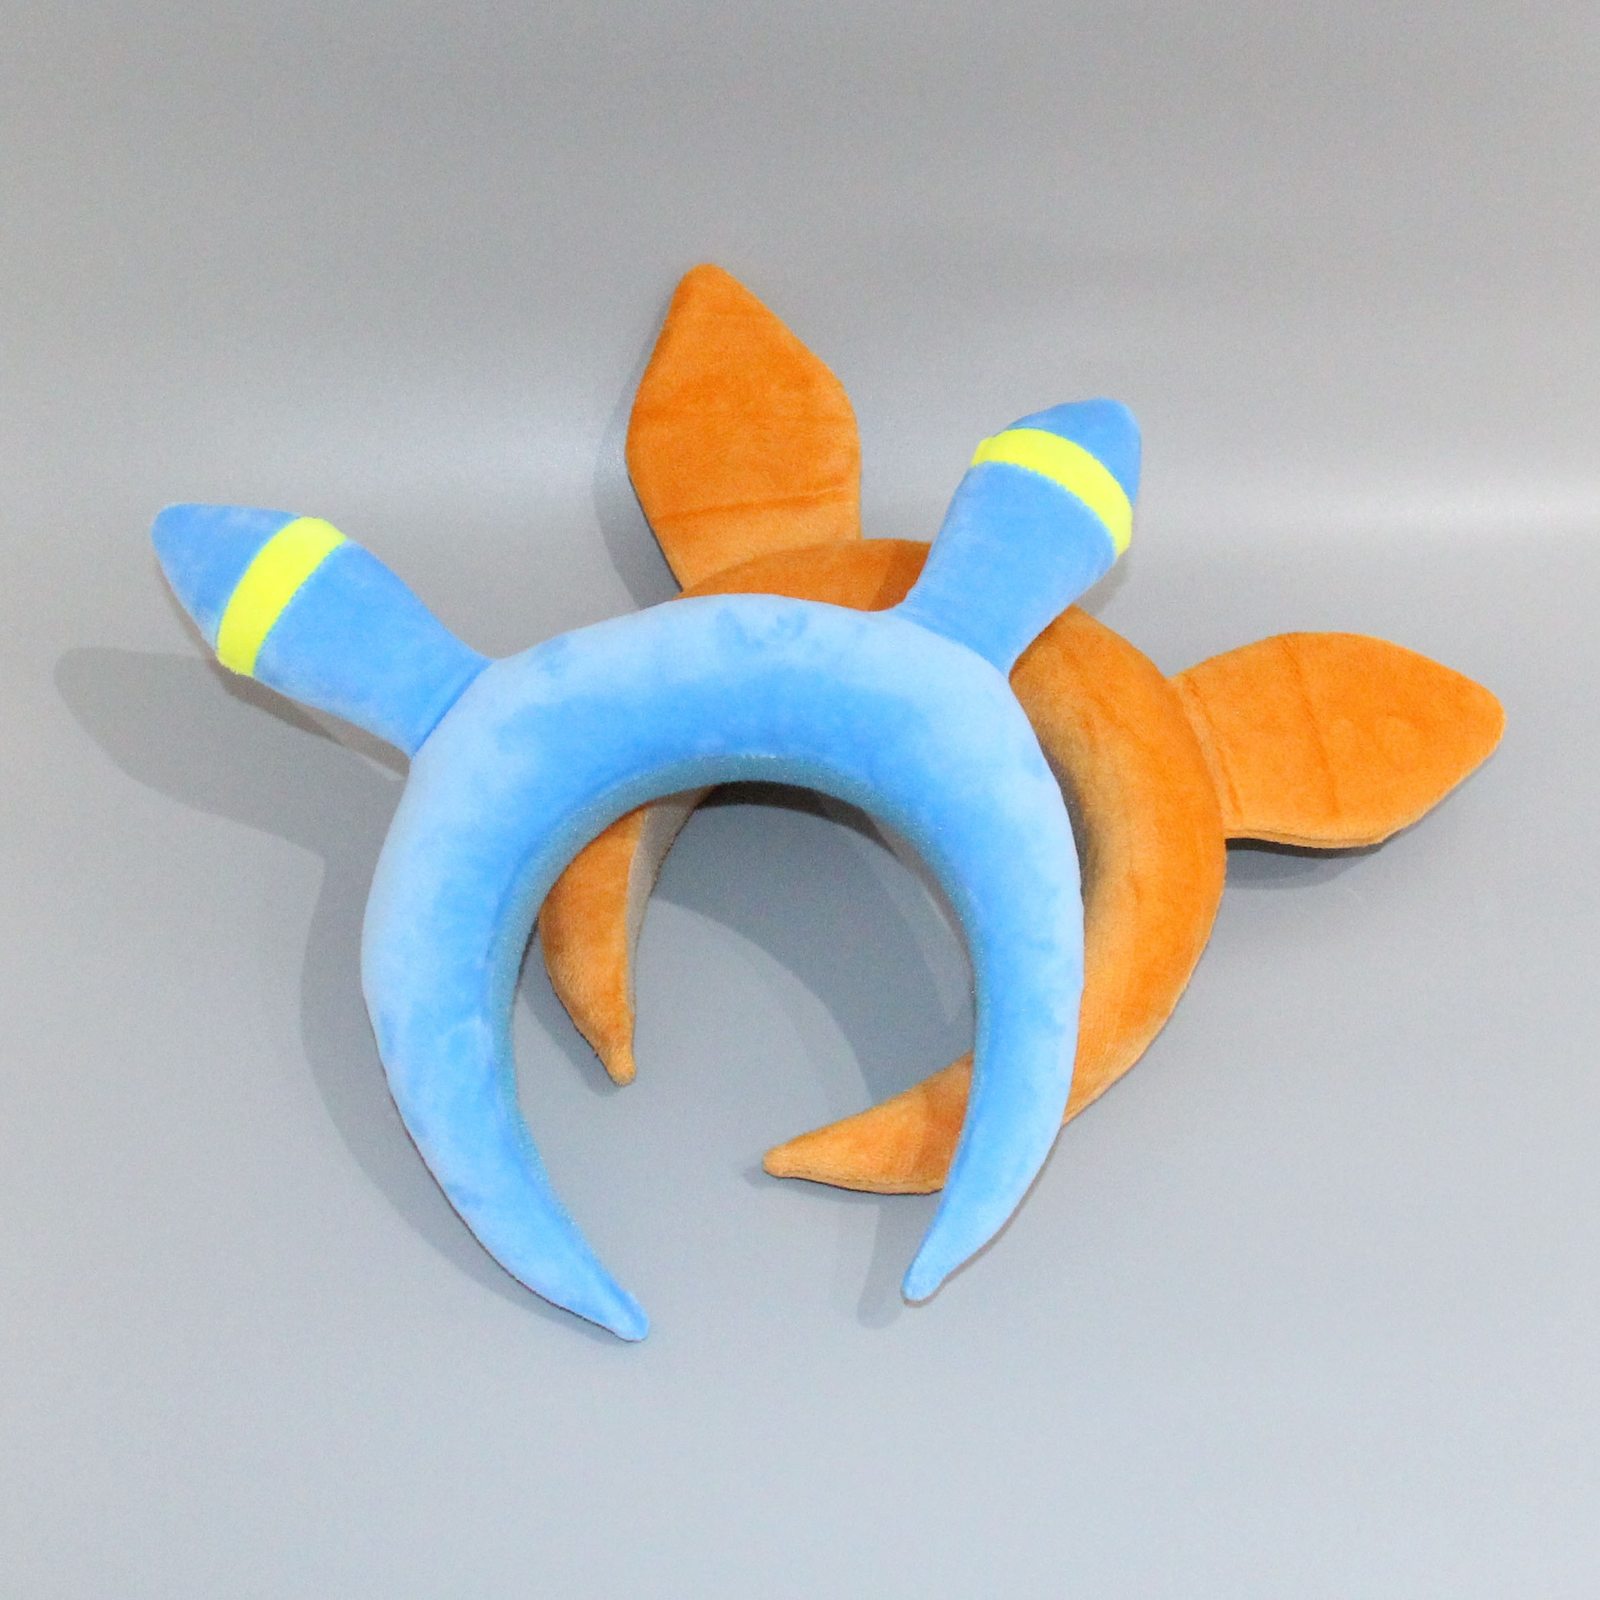 Play Fun Hobby Toys Sylveon Pikachu Mimikyu Eevee Vaporeon Headband Plush Ins A Toys And Hobbies 4587